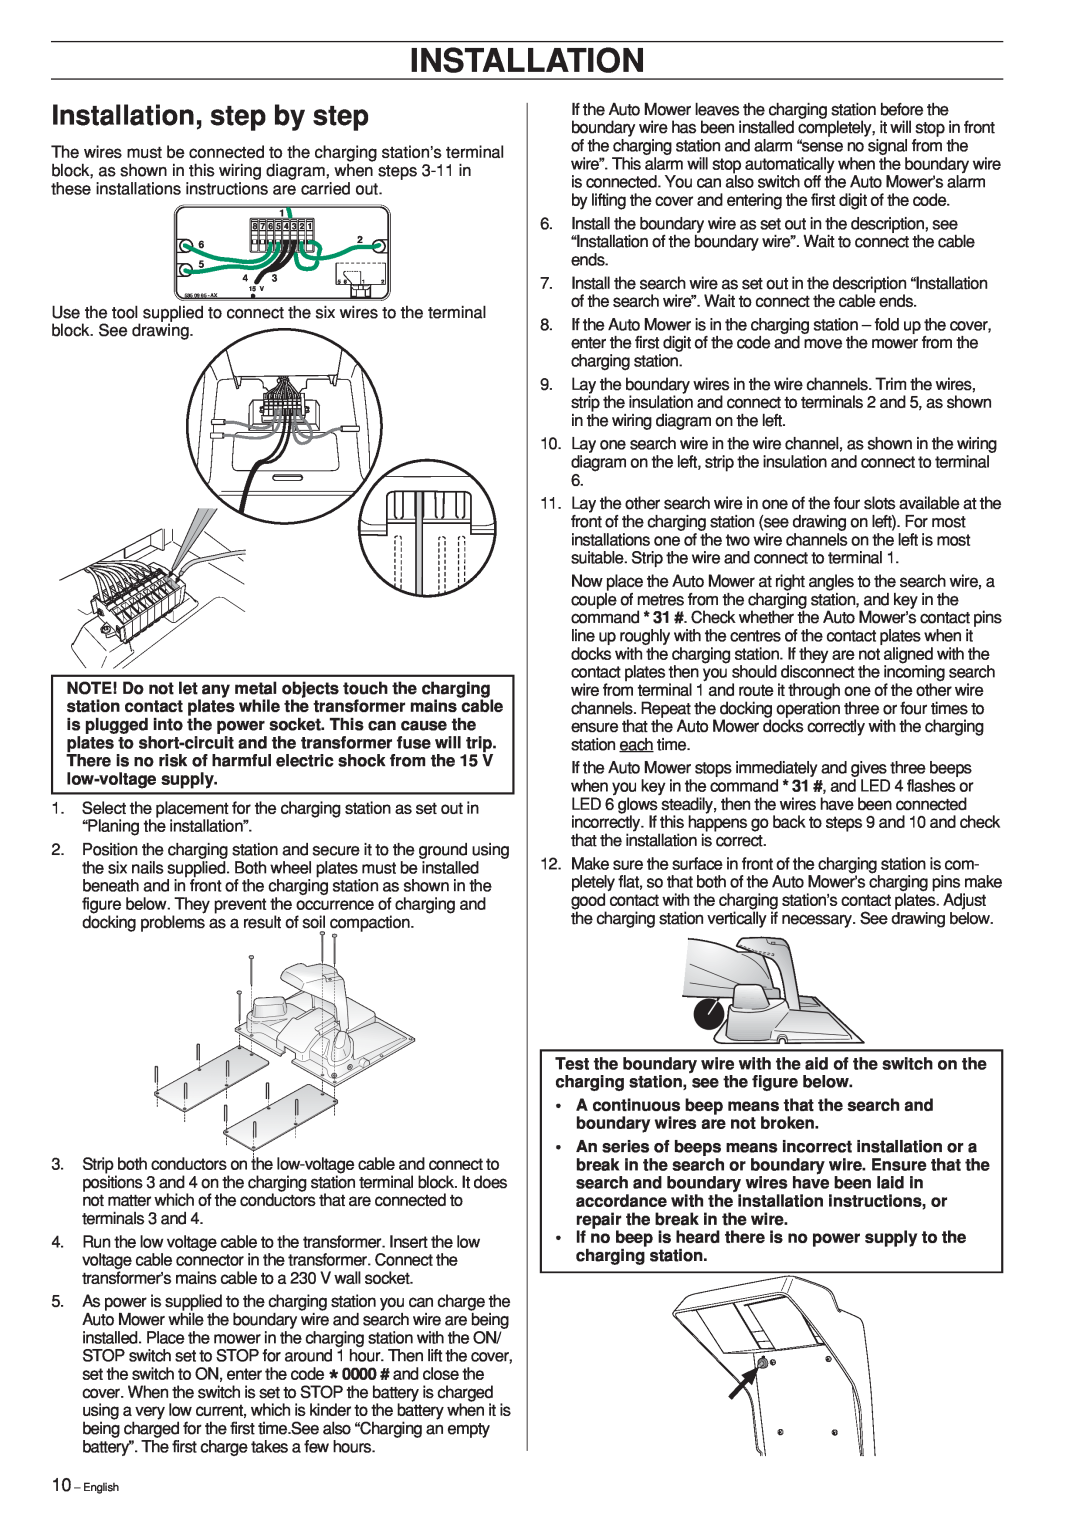 Husqvarna Robotic Lawn Mower manual Installation, step by step 